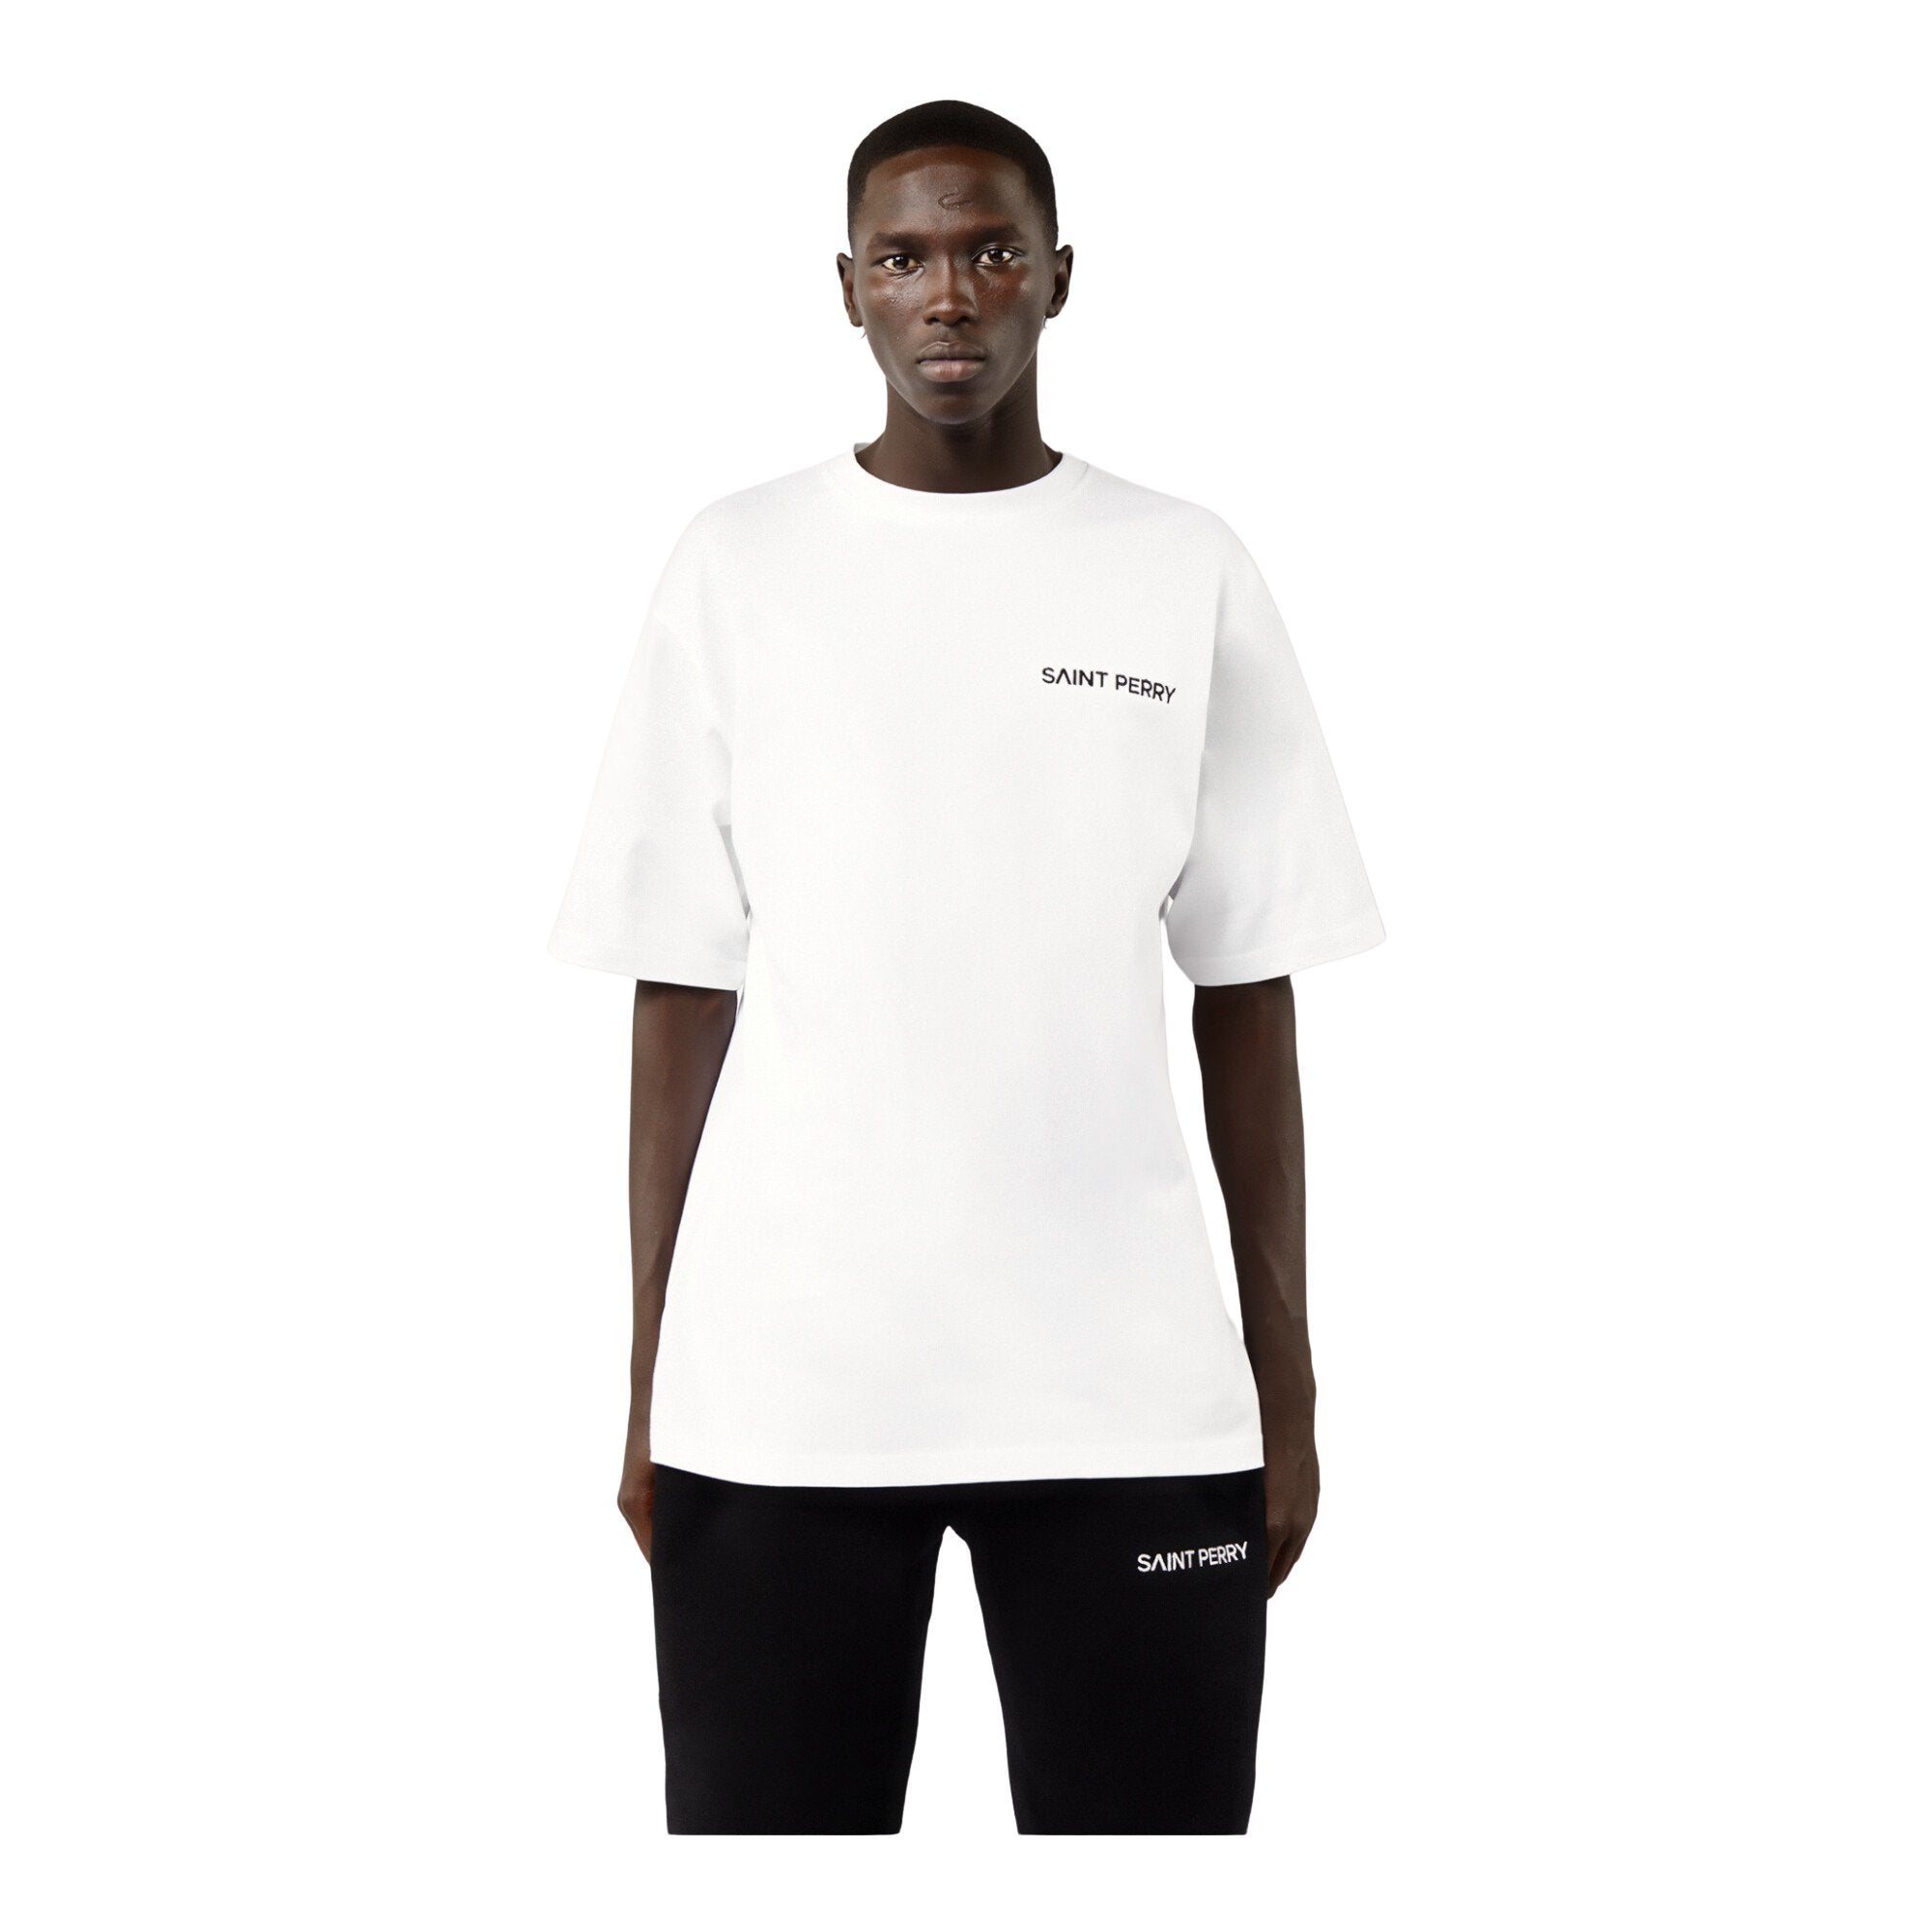 T-Shirt White - SAINT PERRY